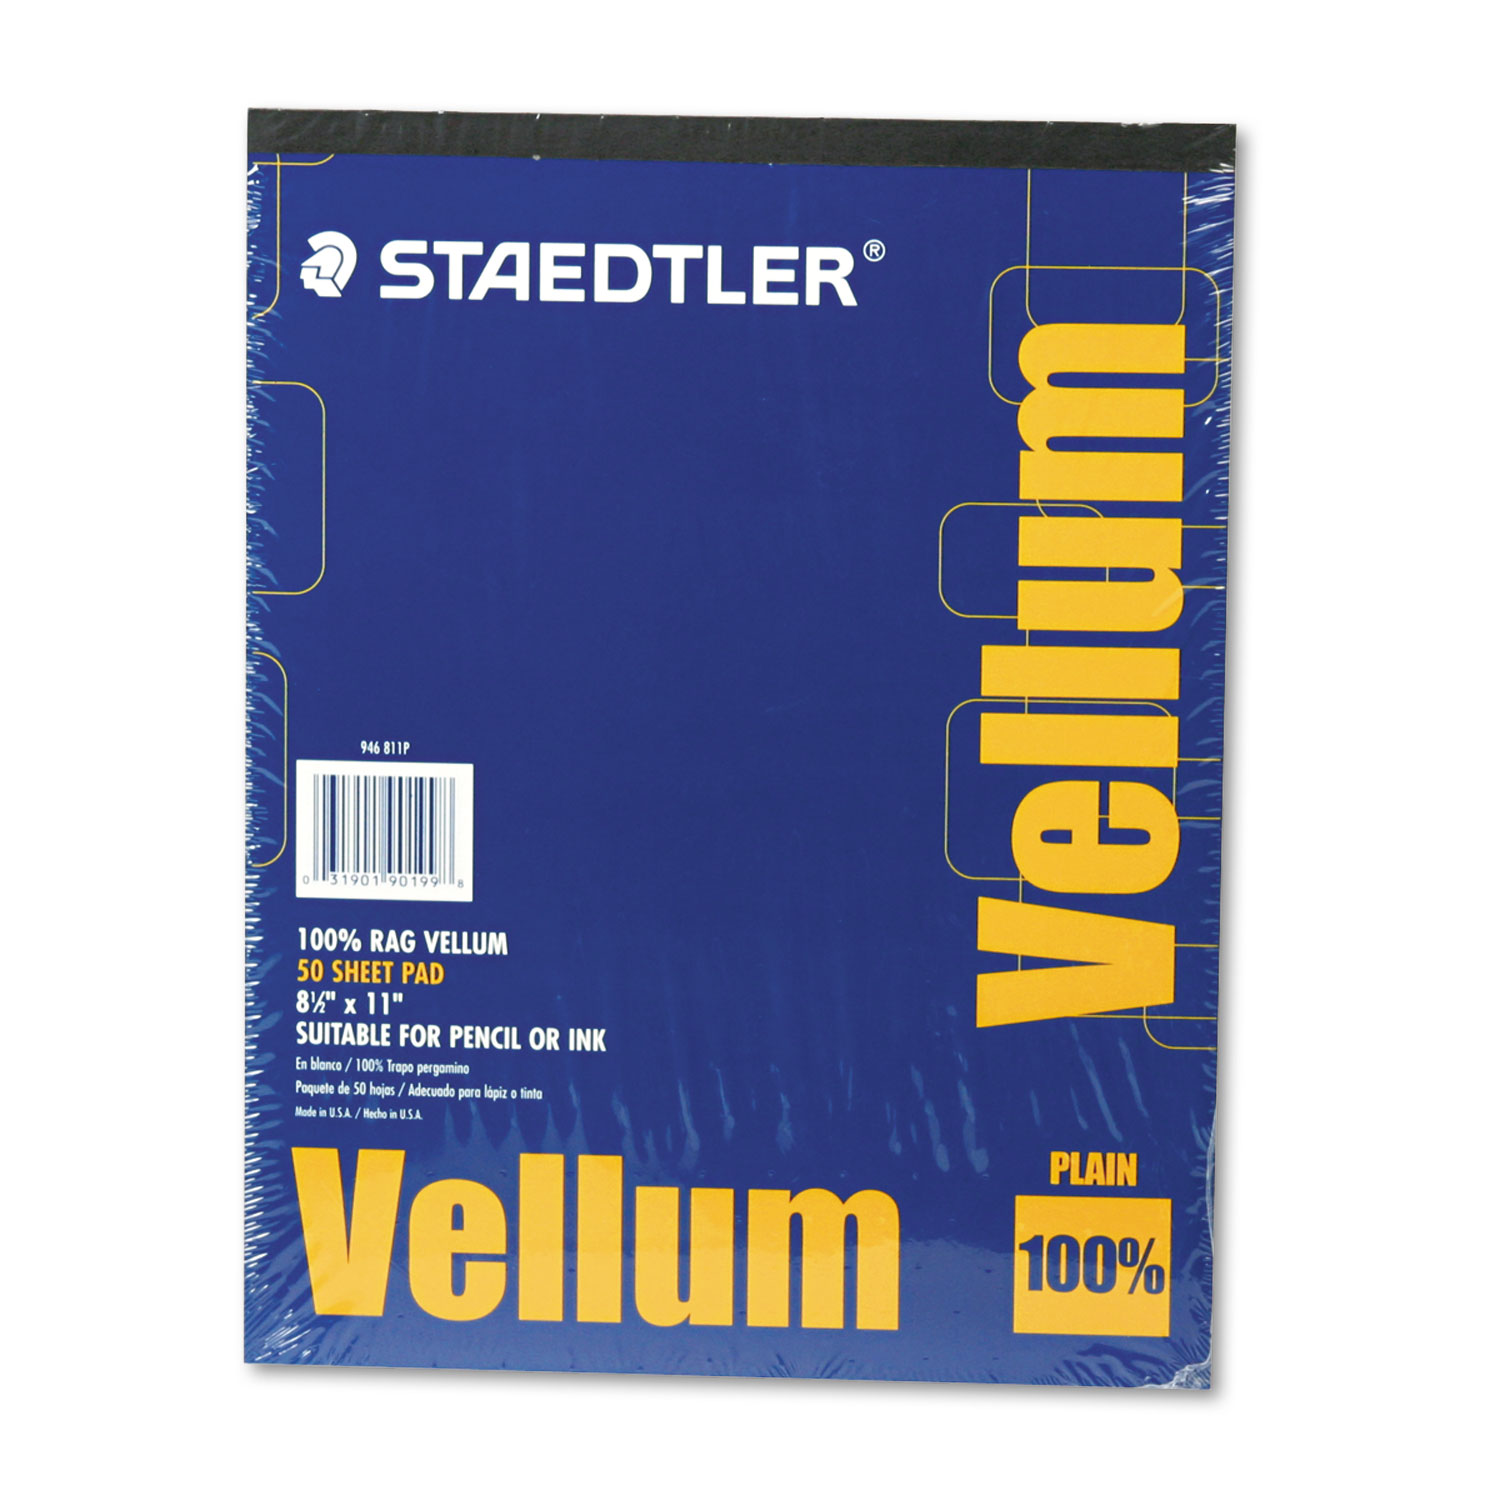  Staedtler 946811P Mars Translucent Vellum Art and Dra fting Paper, 16lb, 8.5 x 11, 50/Pad (STD946811P) 